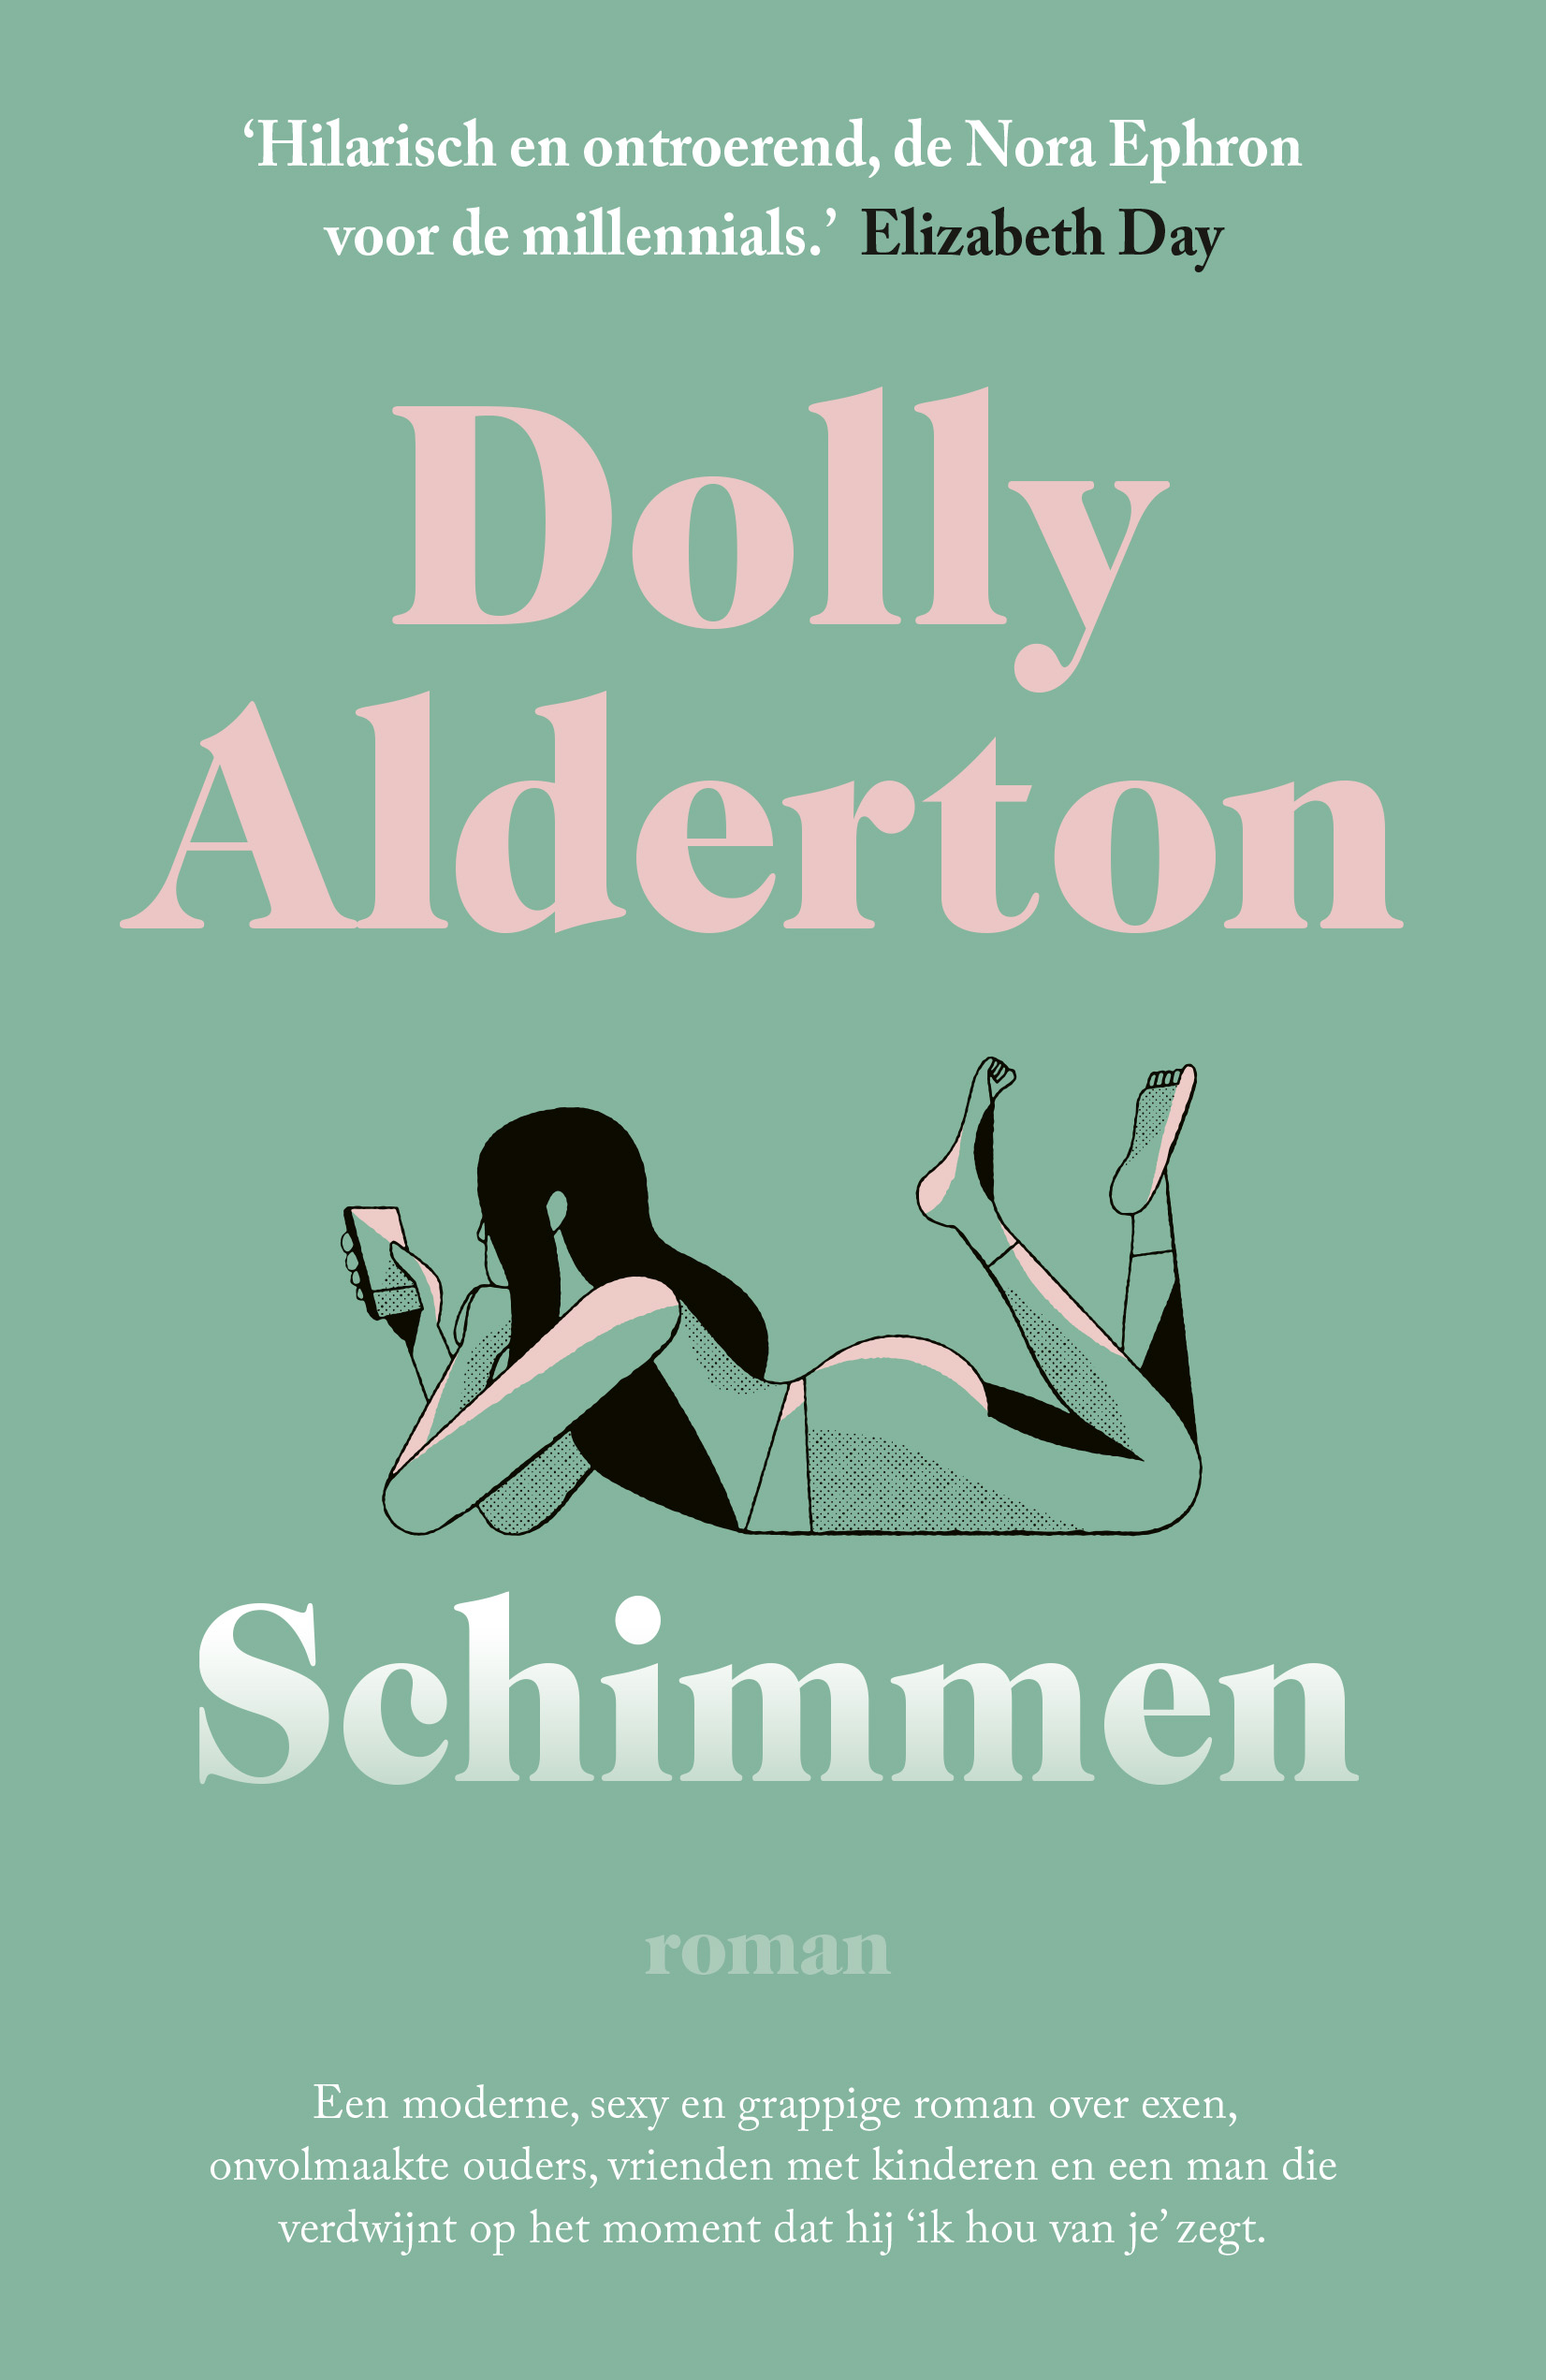 Schimmen Dolly Alderton Book Cover